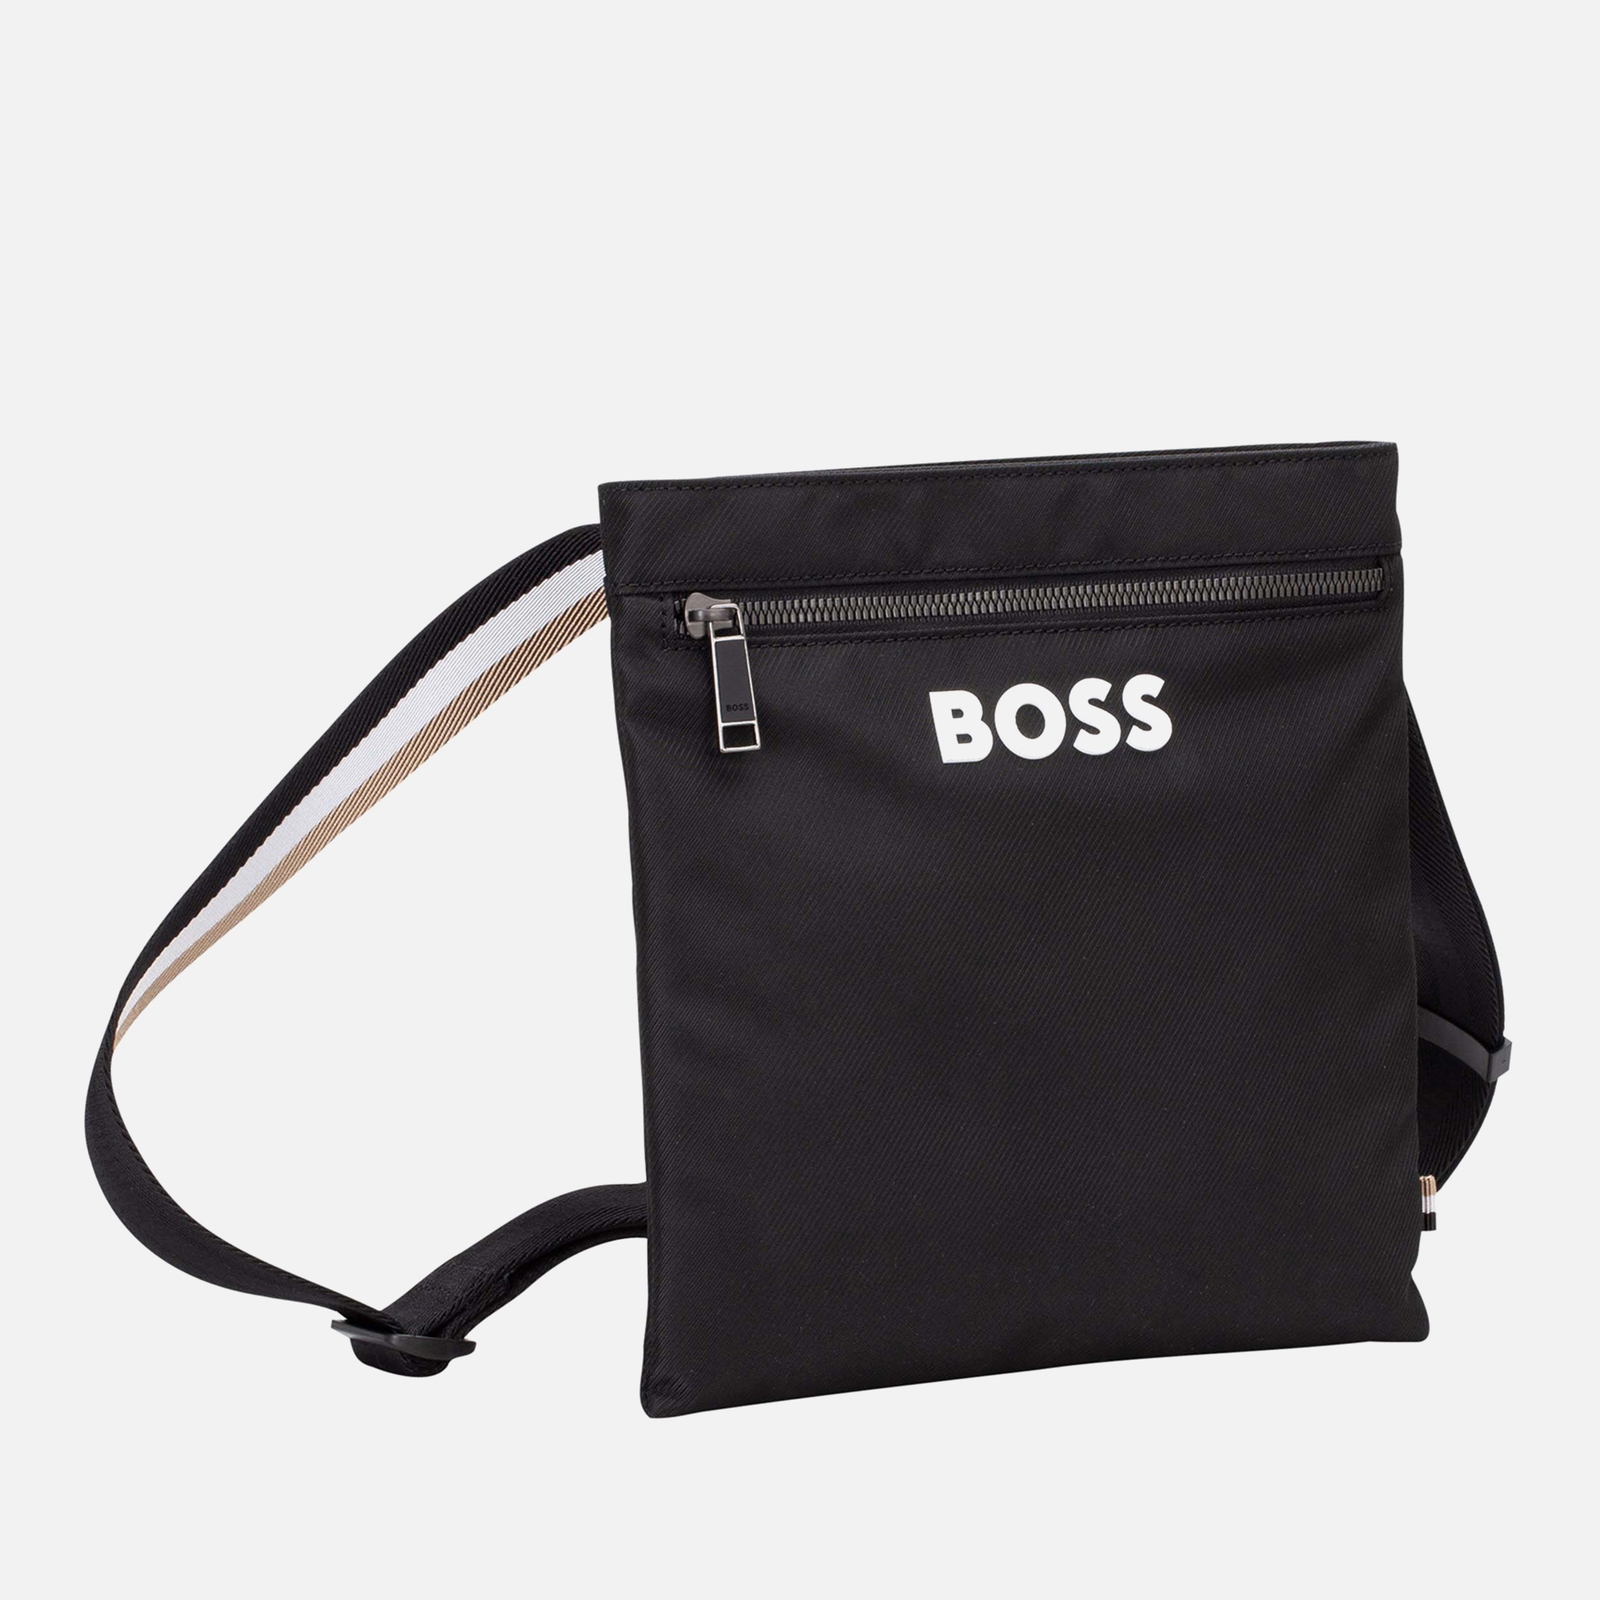 BOSS Catch Envelope Canvas Messenger Bag